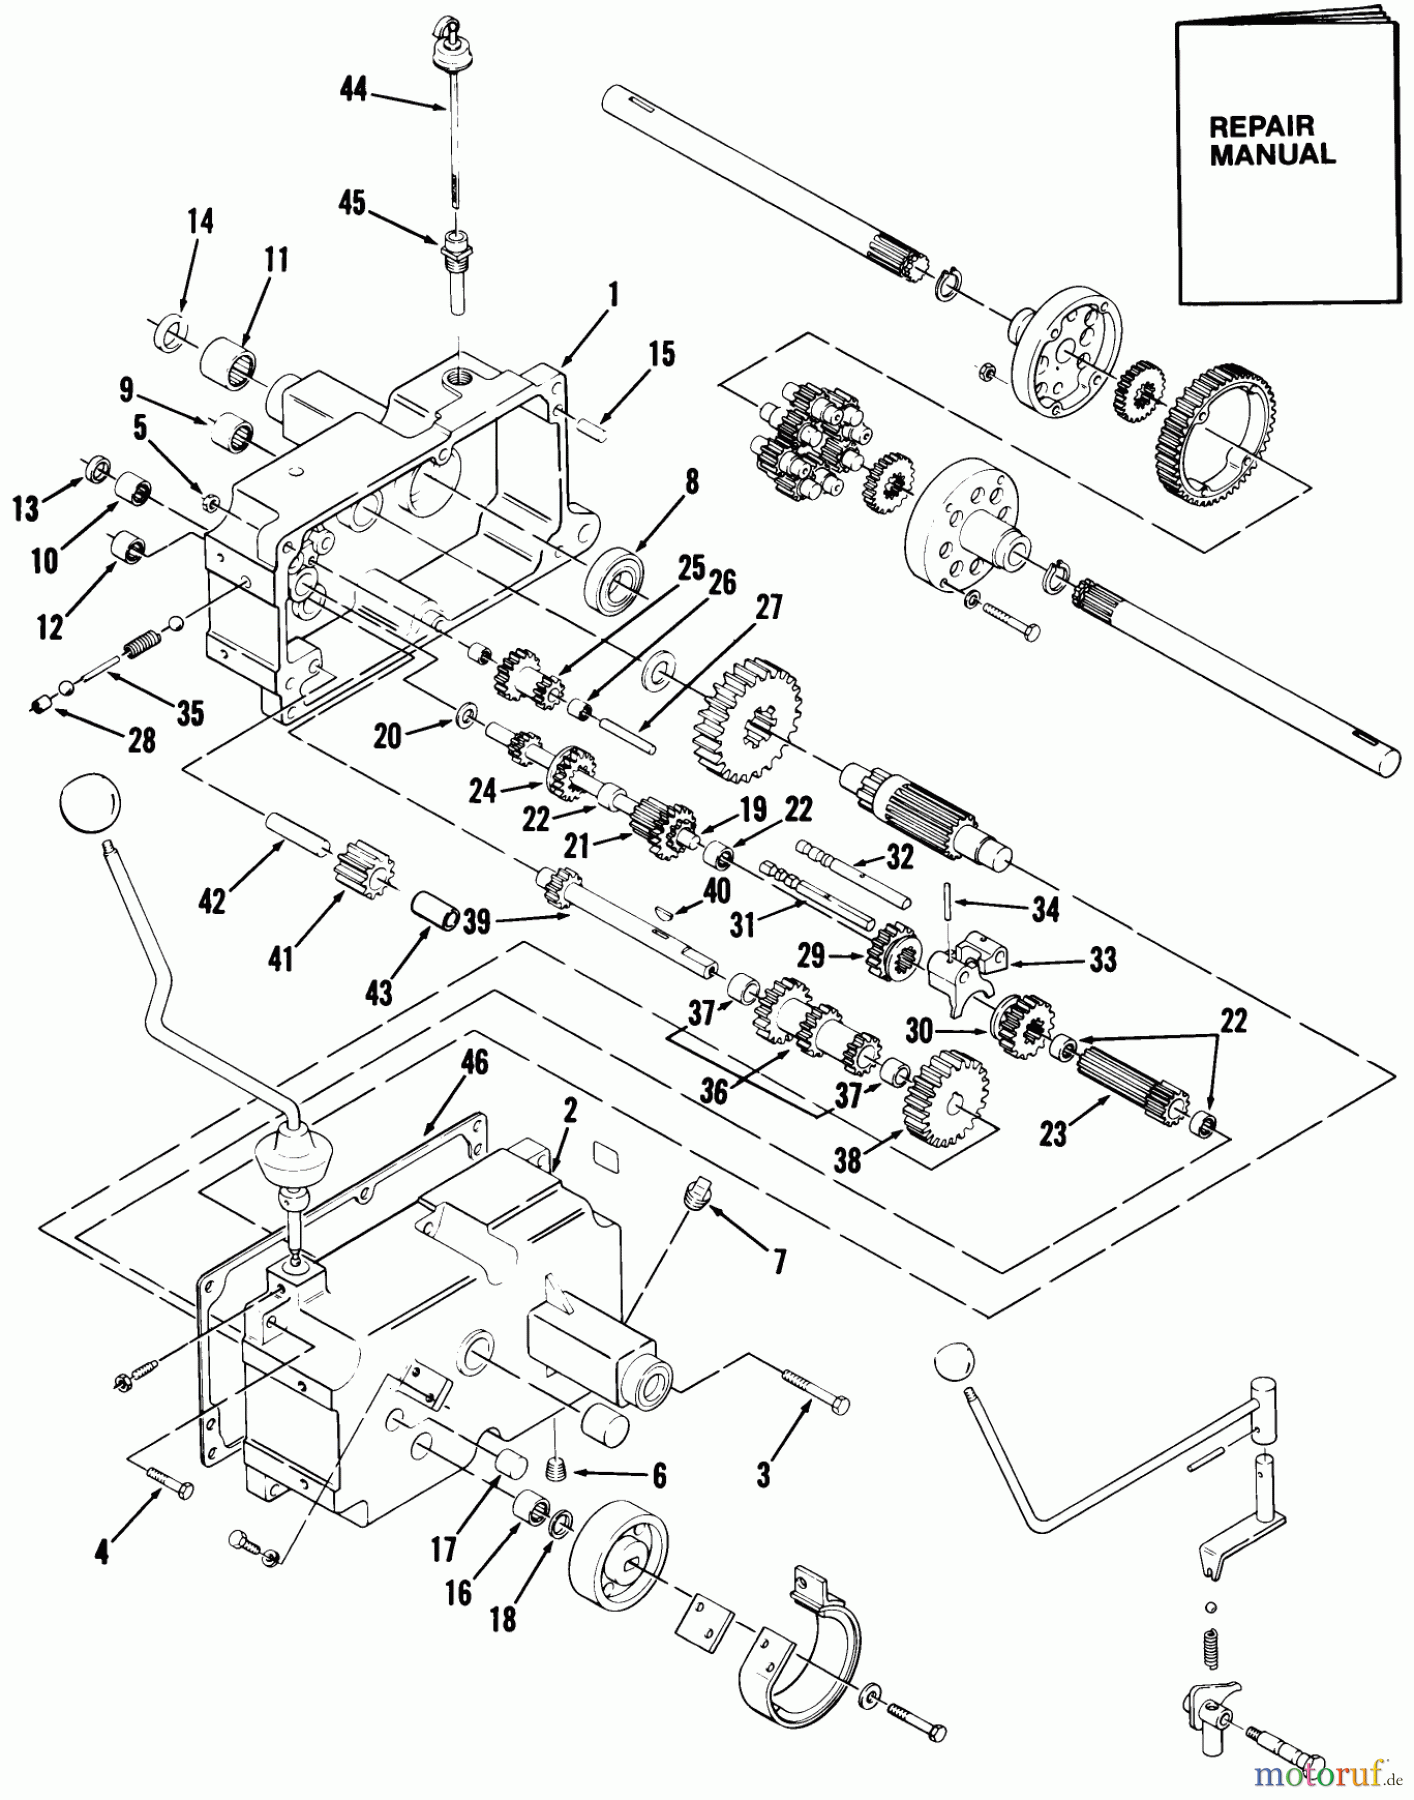  Toro Neu Mowers, Lawn & Garden Tractor Seite 1 01-14KE03 (C-145) - Toro C-145 Automatic Tractor, 1982 MECHANICAL TRANSMISSION-8 SPEED